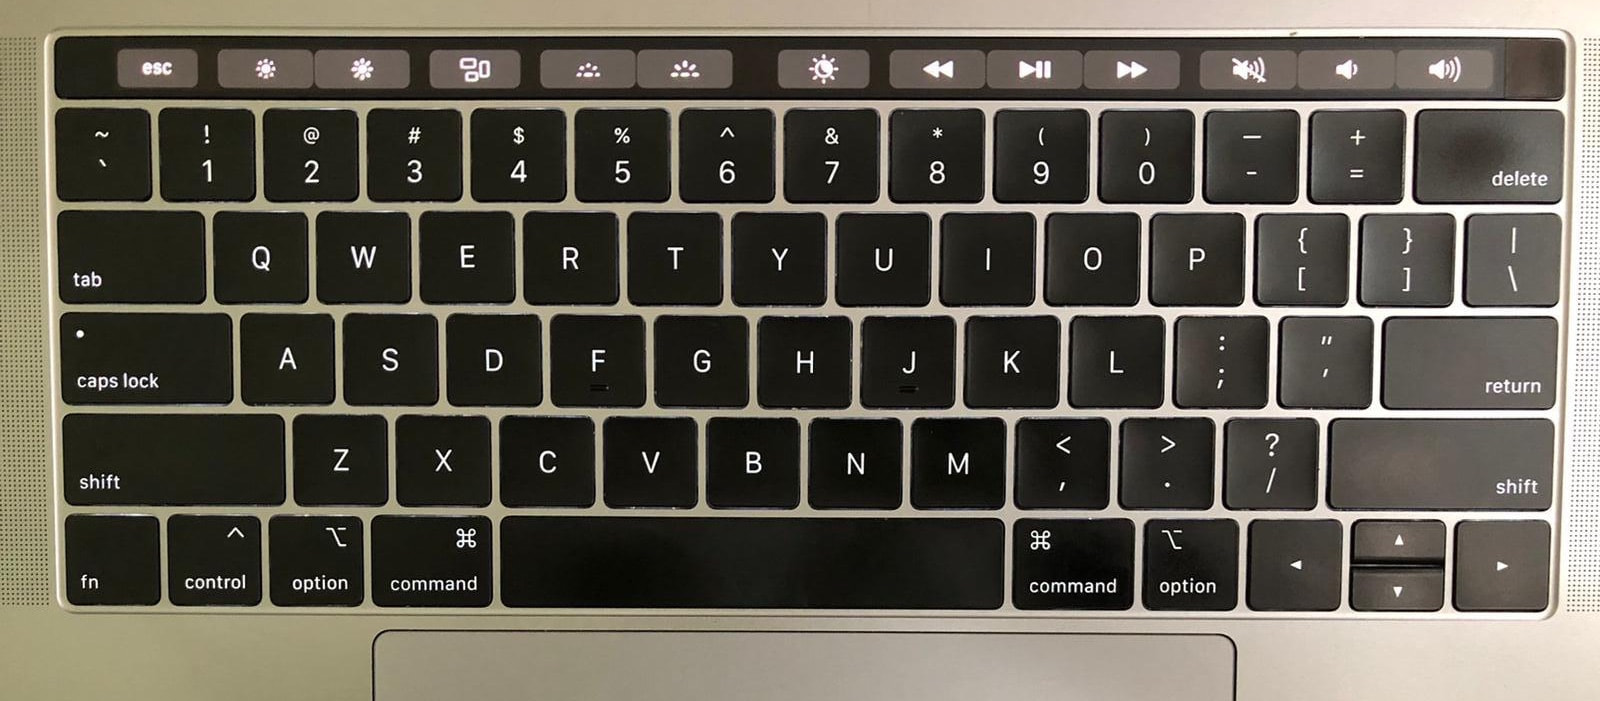 Mac keyboard layout.